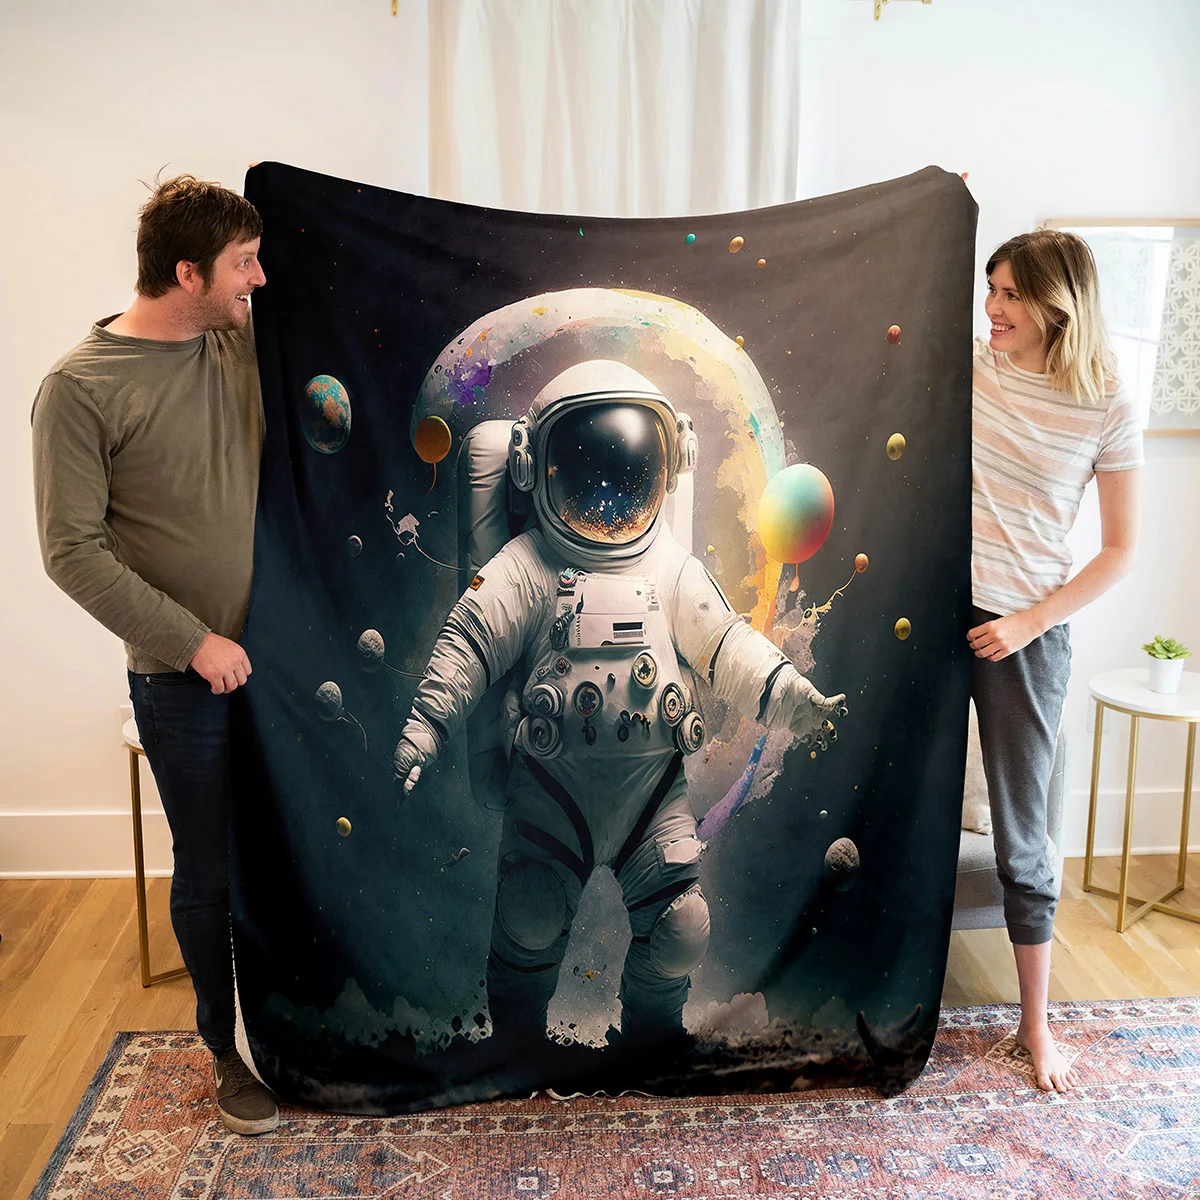 

Фланелевое Одеяло с рисунком астронавта, легкий теплый супермягкий плед для кровати, дивана, путешествий